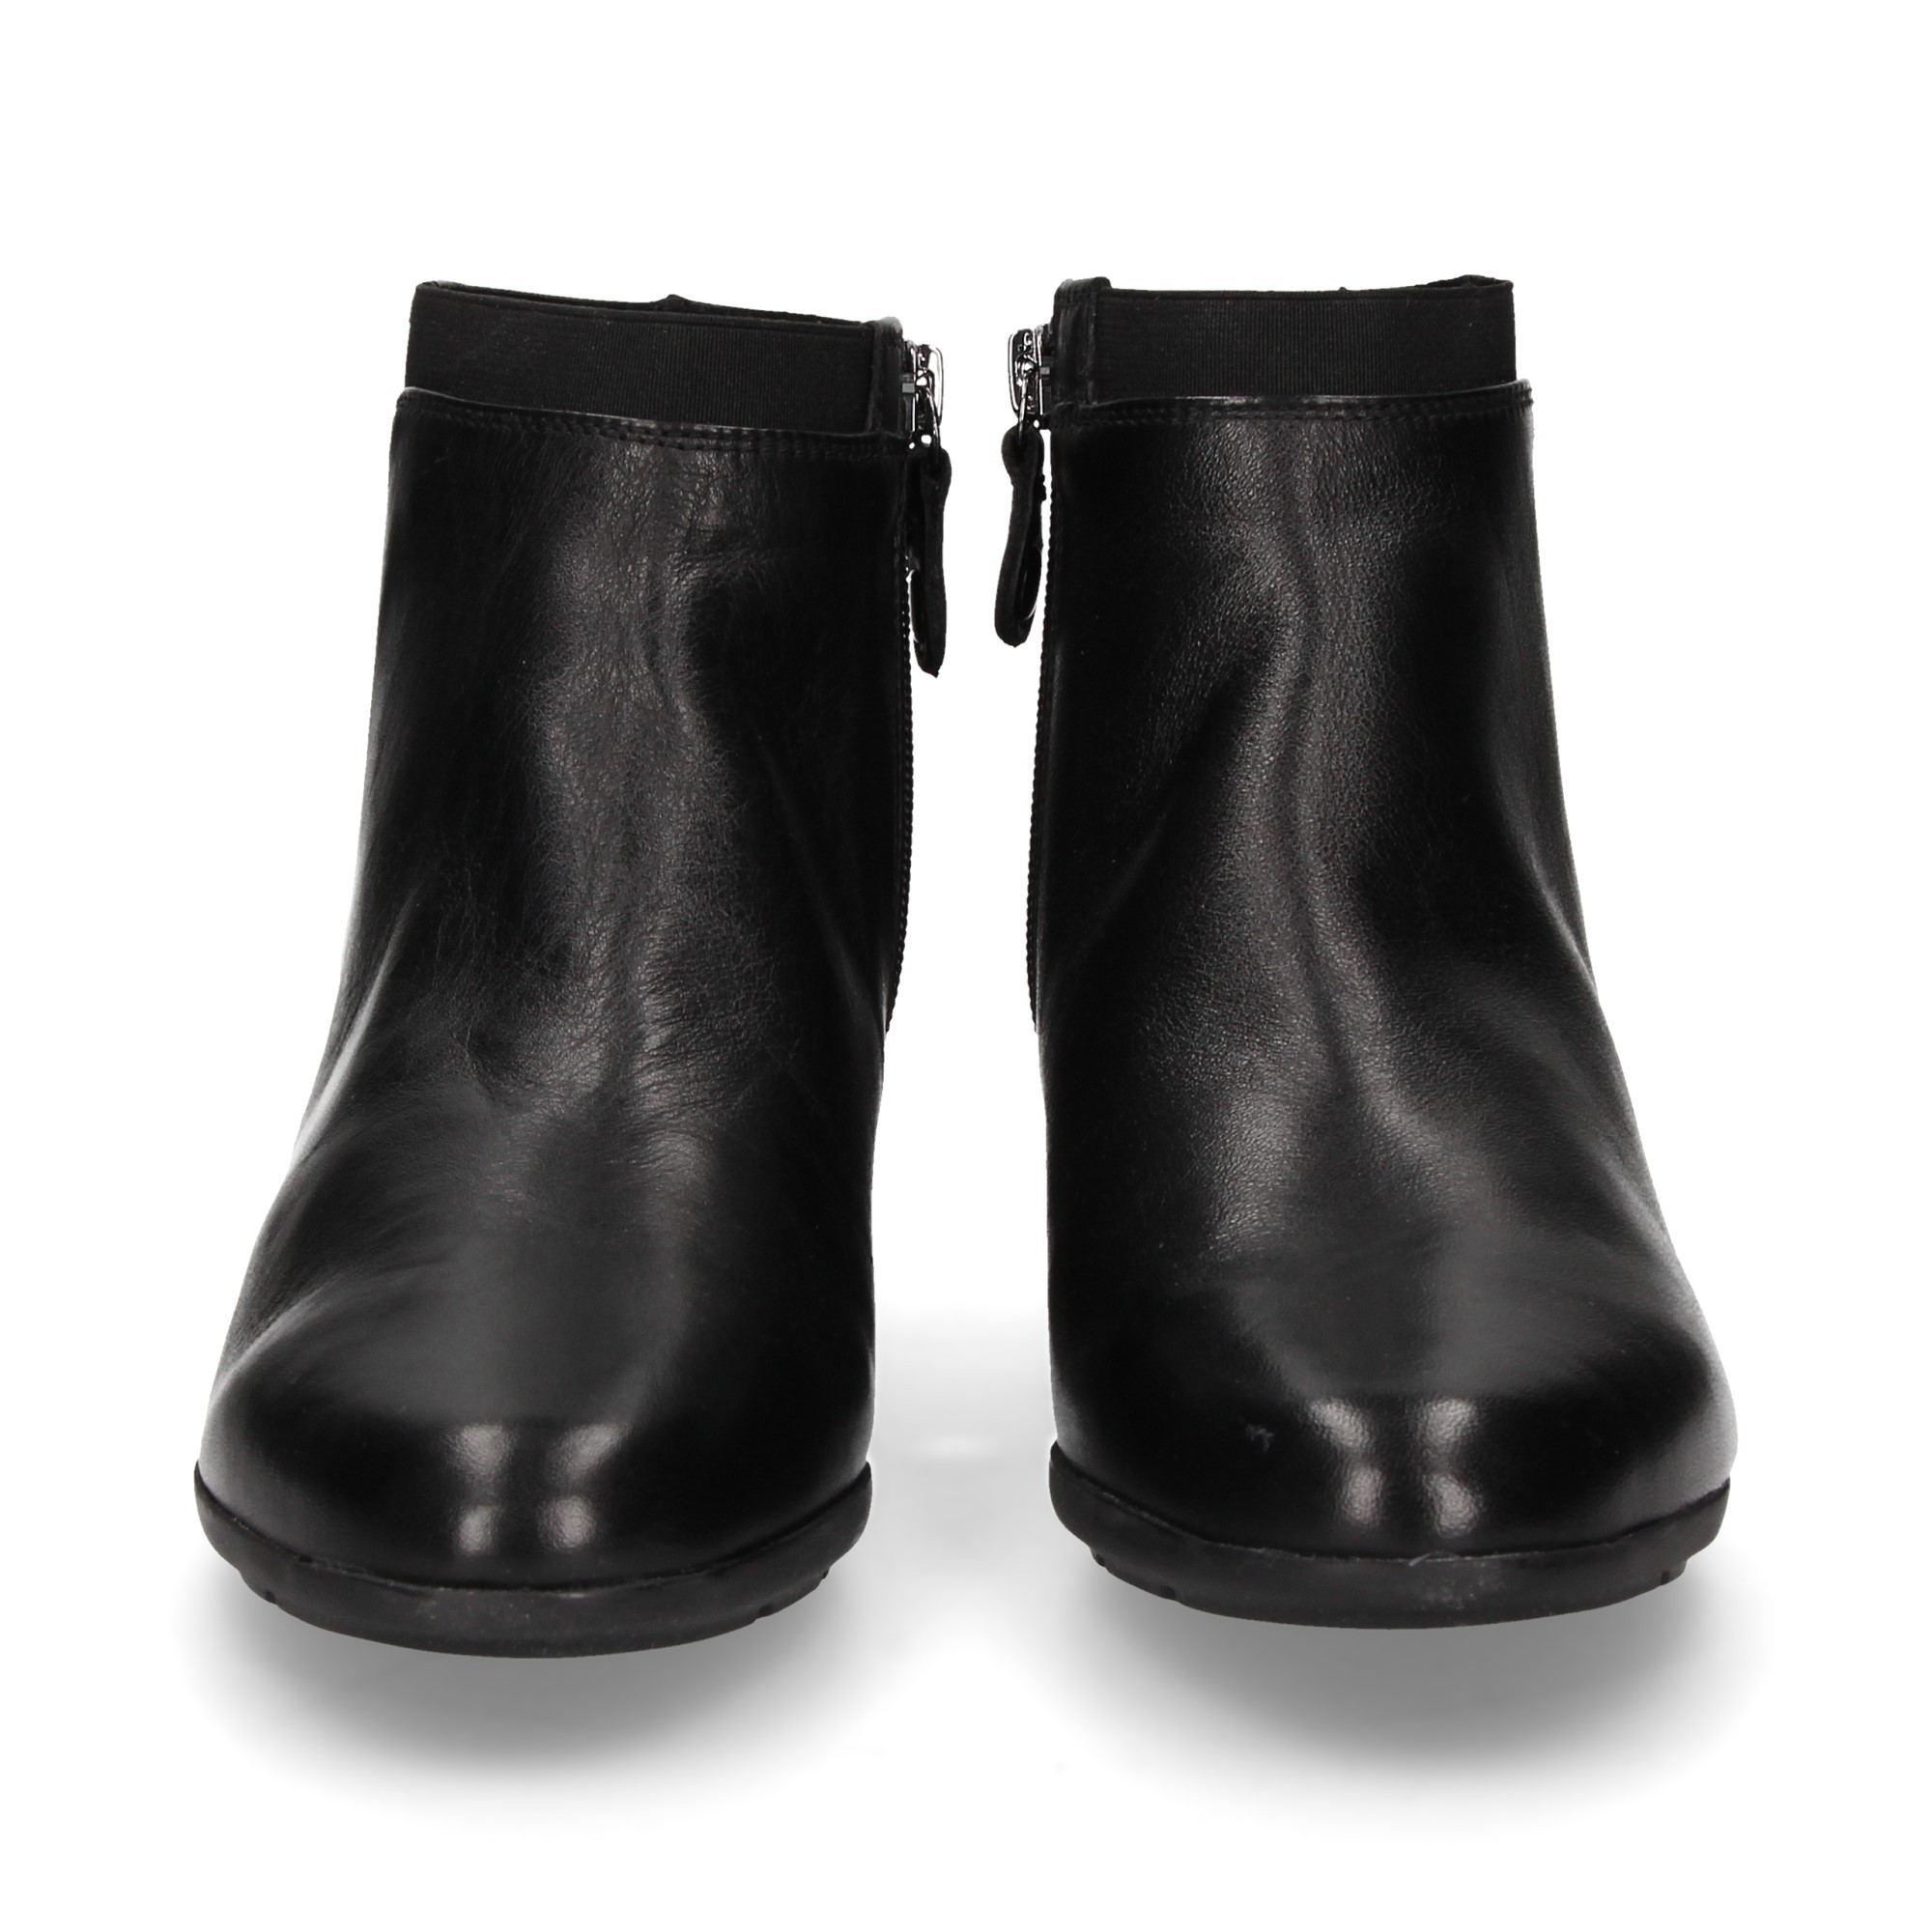 elastic-boot-black-side